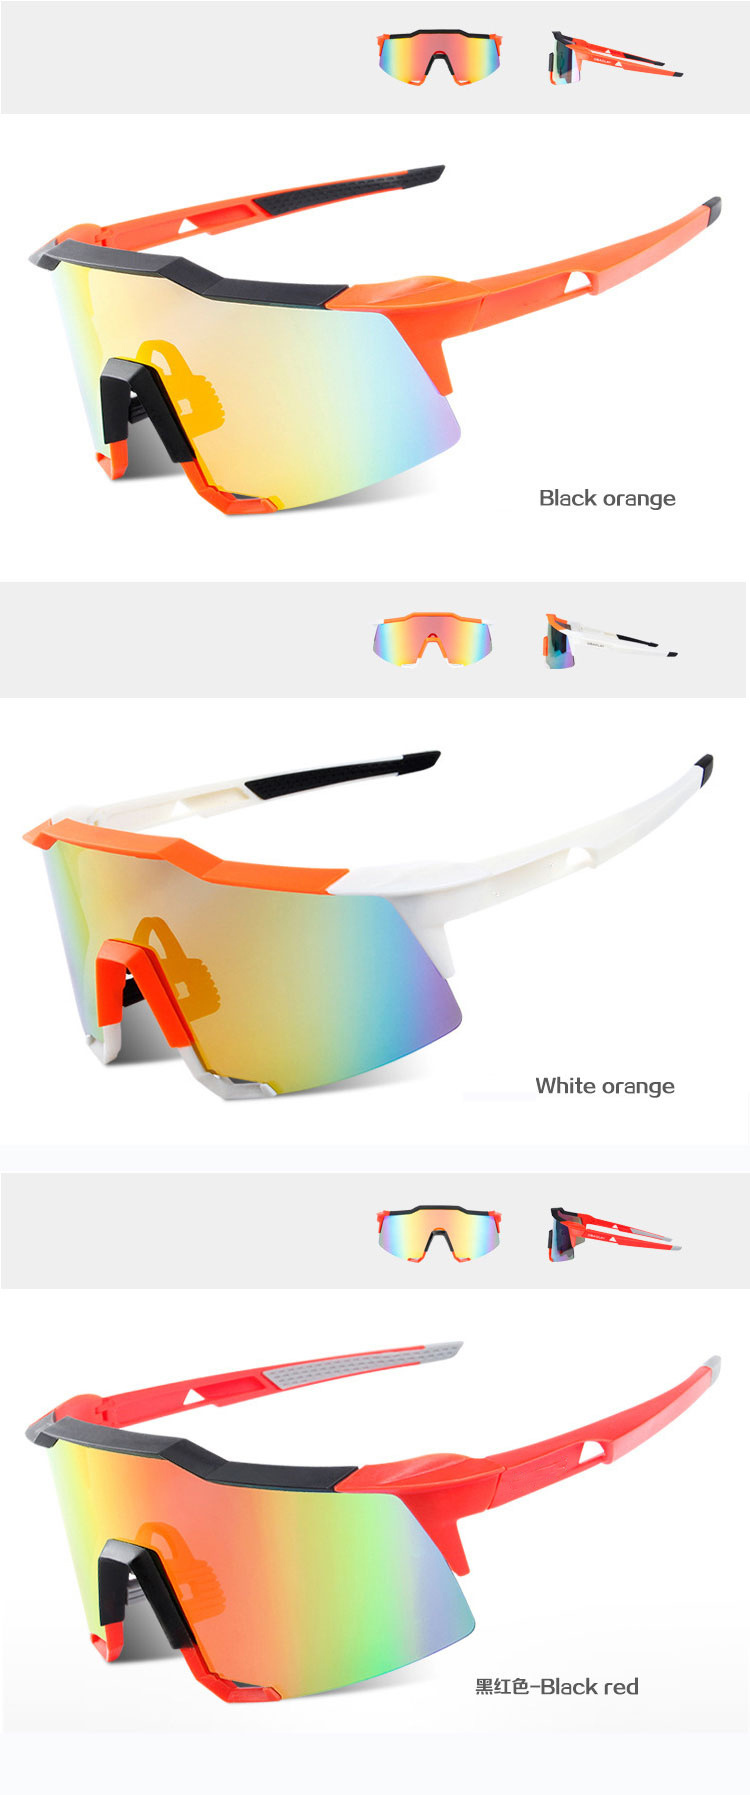 Usom Sports Cycling Sunglasses Biking Glasses with 3 Interchangeable Lenses Image Gafas Deporte